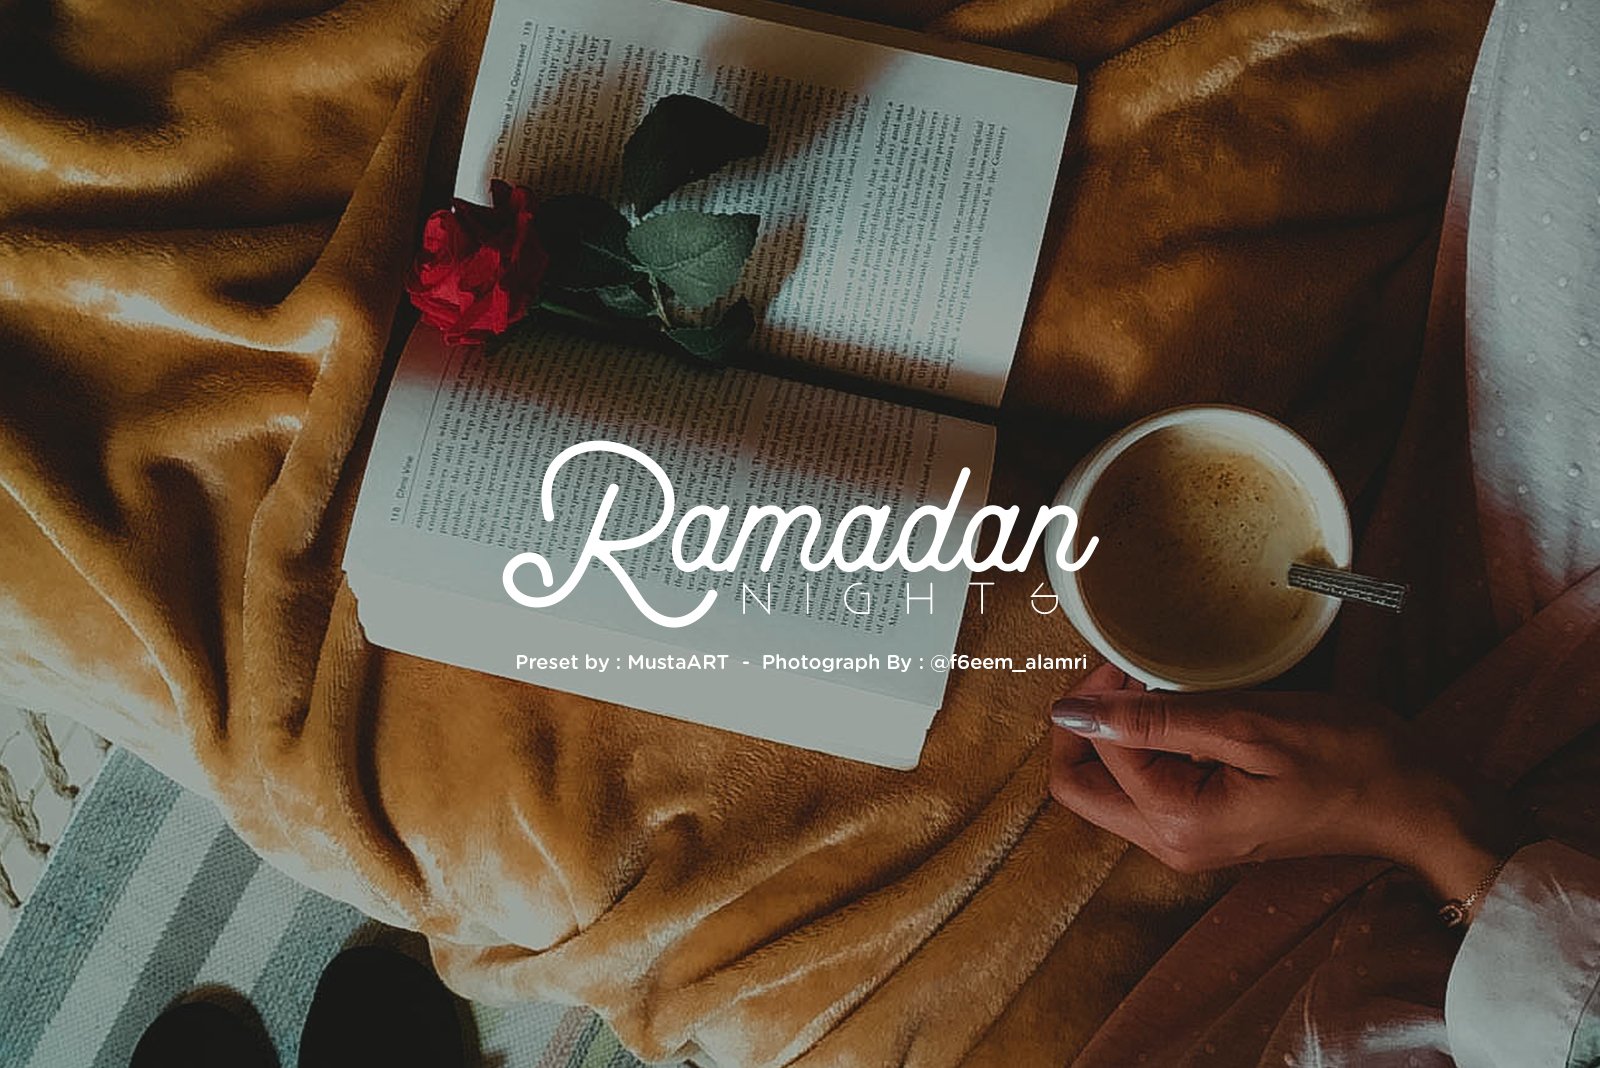 Ramadan Nights v01cover image.